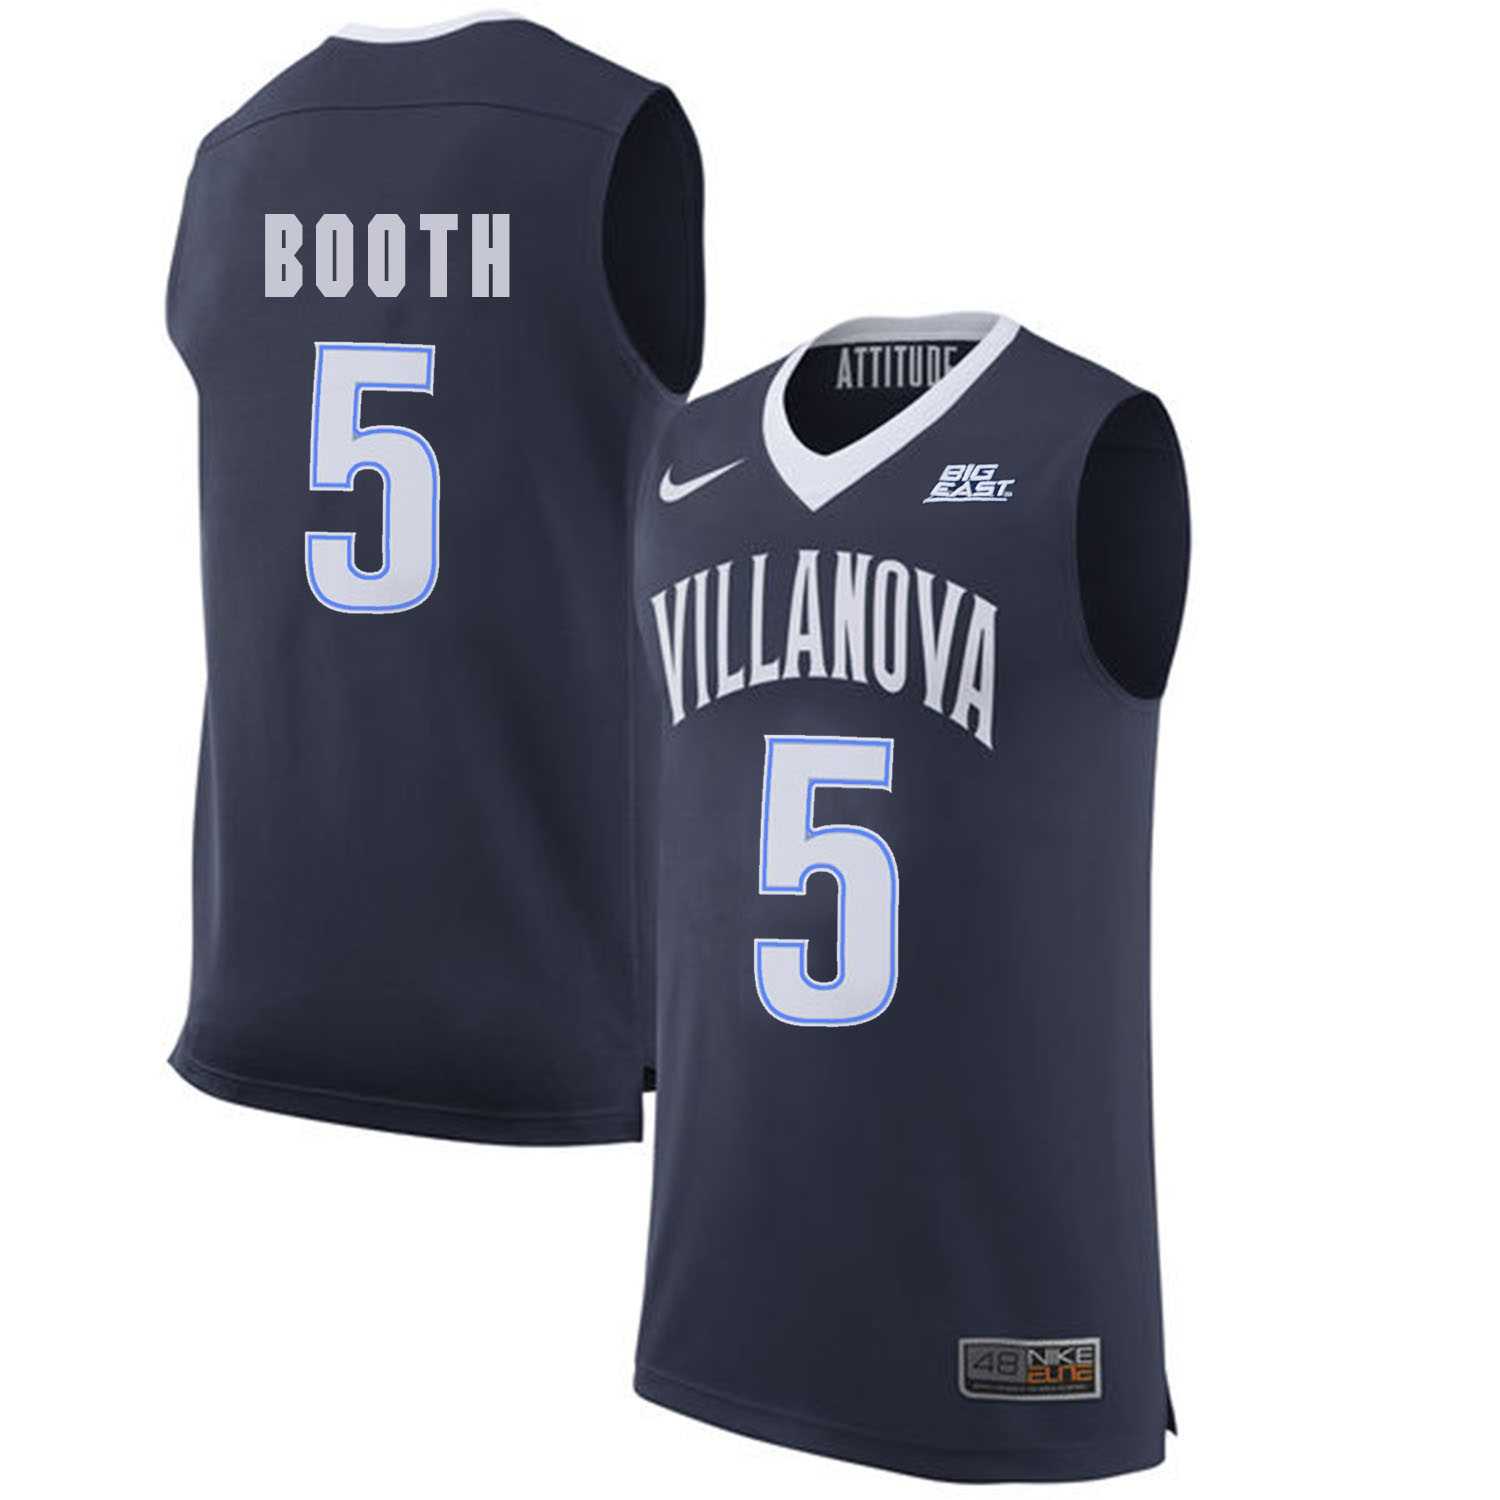 Villanova Wildcats #5 Phil Booth Navy College Basketball Elite Jersey